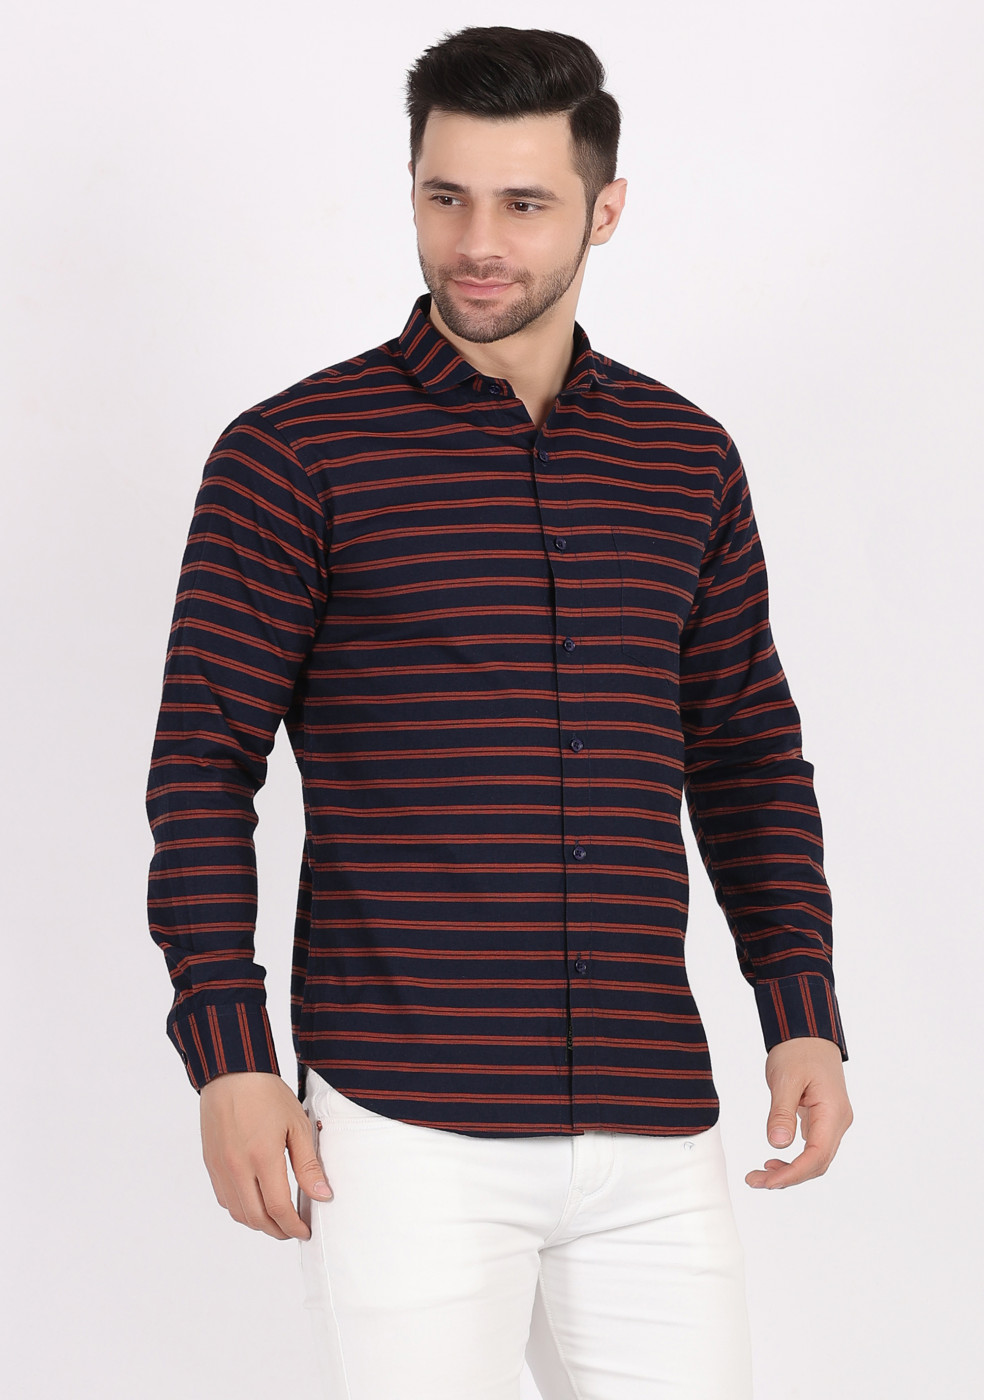 ASHTOM Men Navy & Orange Horizontal Striped Casual Shirt